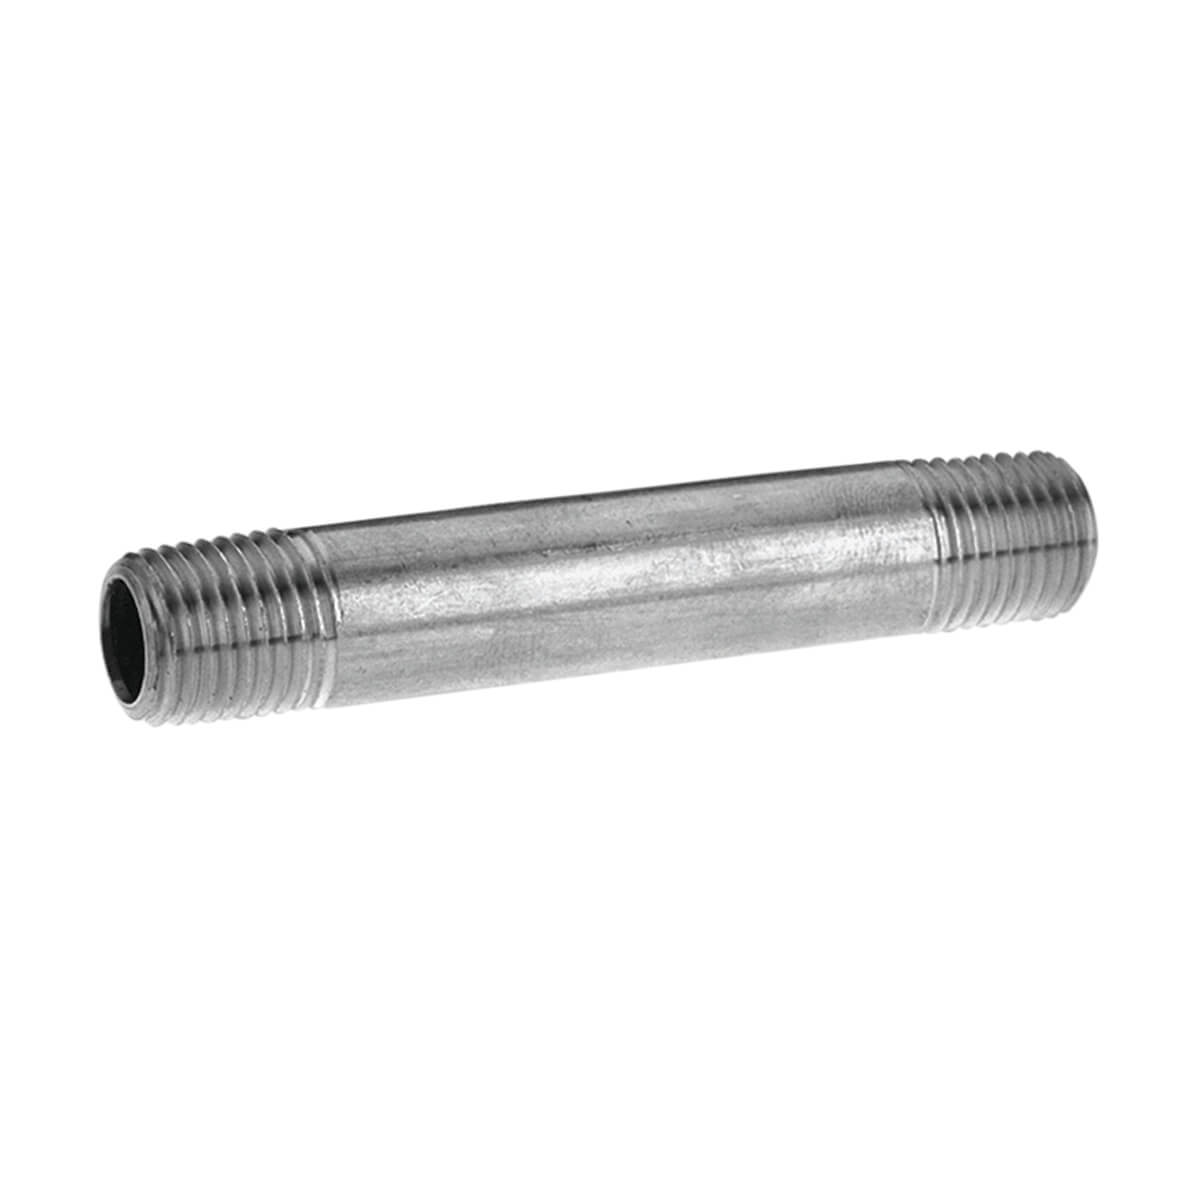 Pipe Nipple Galvanized Steel - 2-in x 6-in